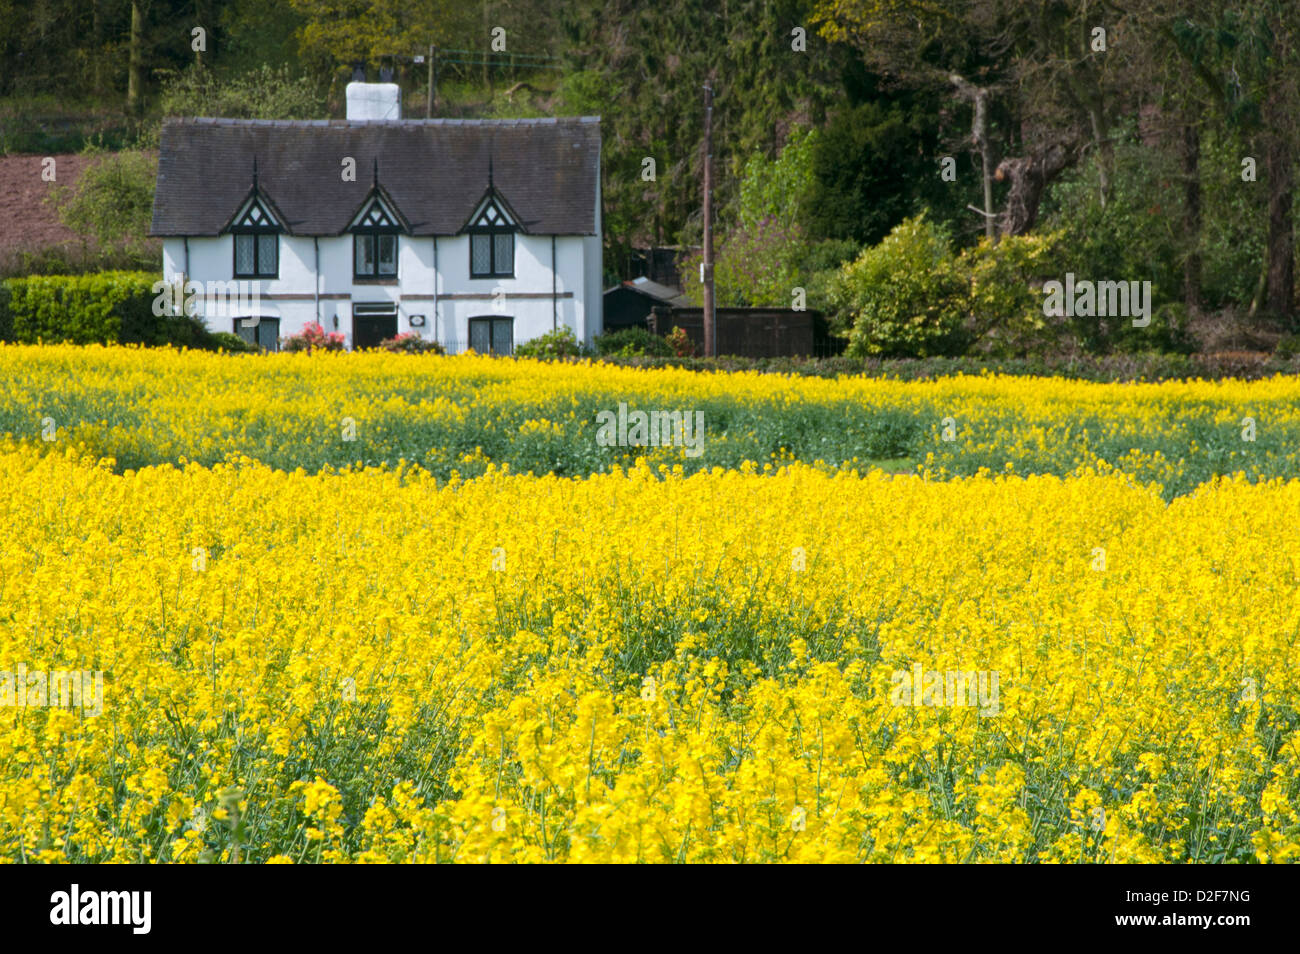 Hübsche weiße Hütte & gelben Raps Feld, nahe Peckforton, Cheshire, England, UK Stockfoto